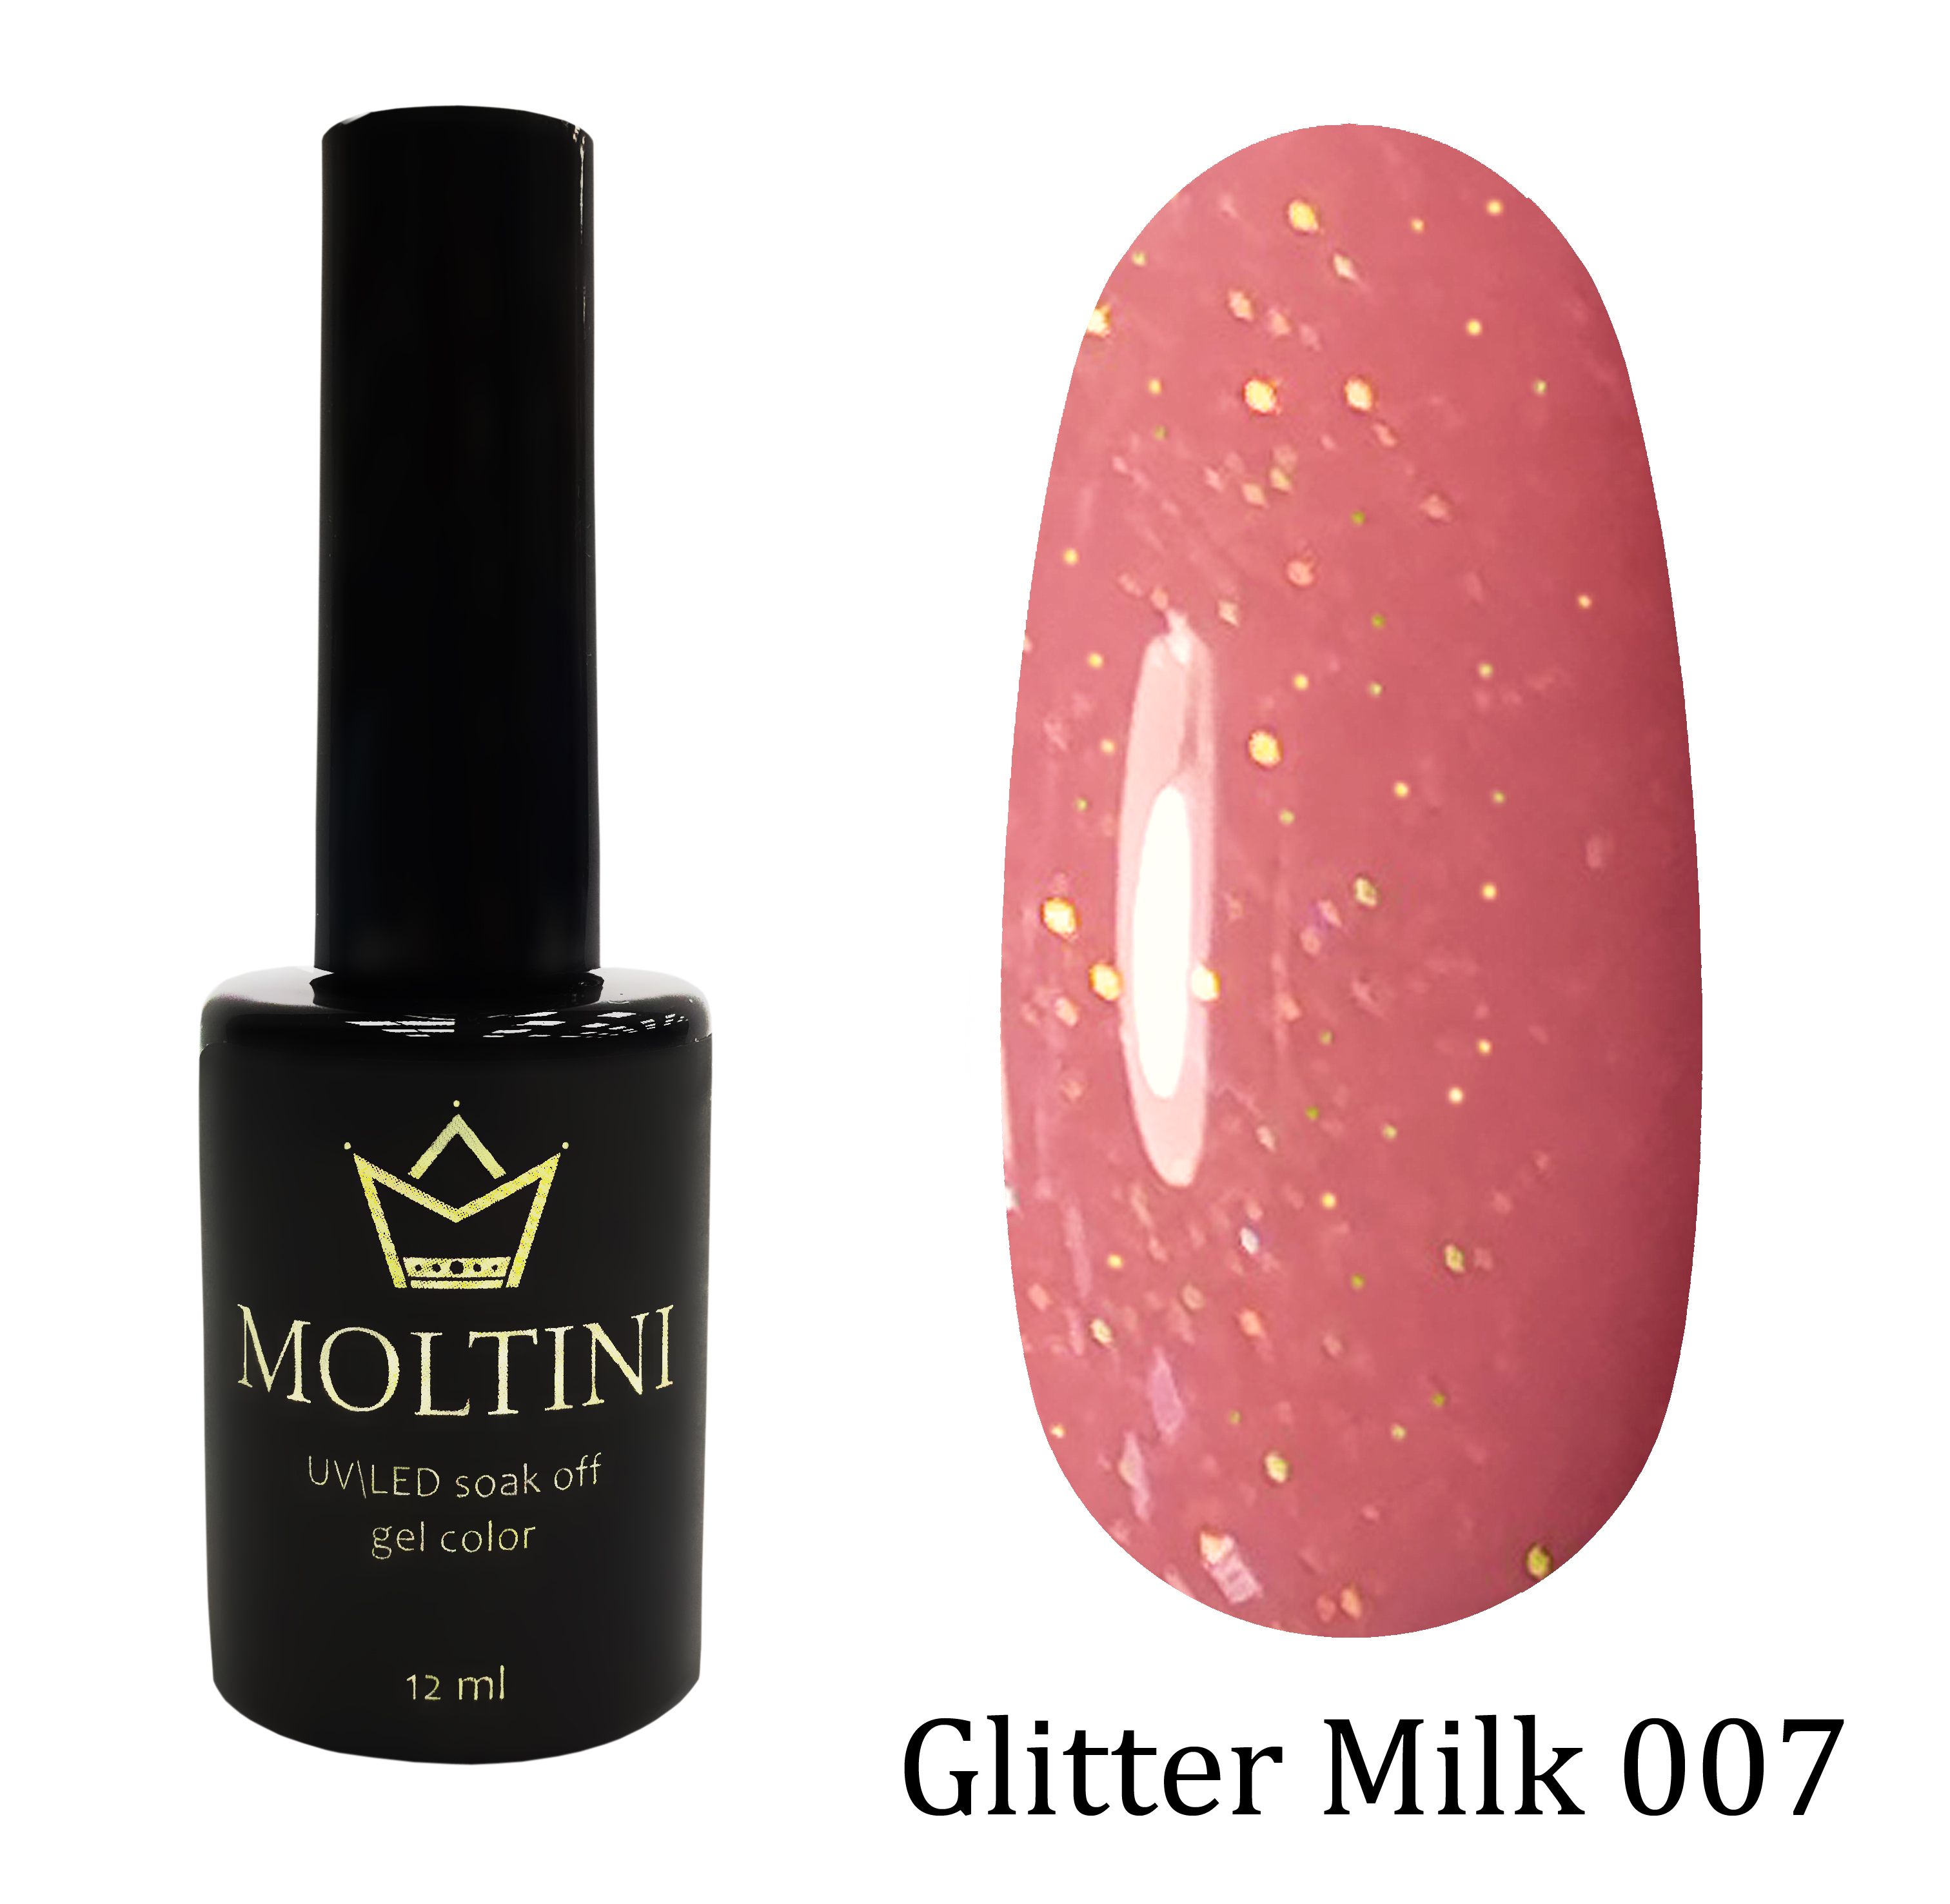 Moltini цветной гель-лак Glitter Milk 007, 12 мл